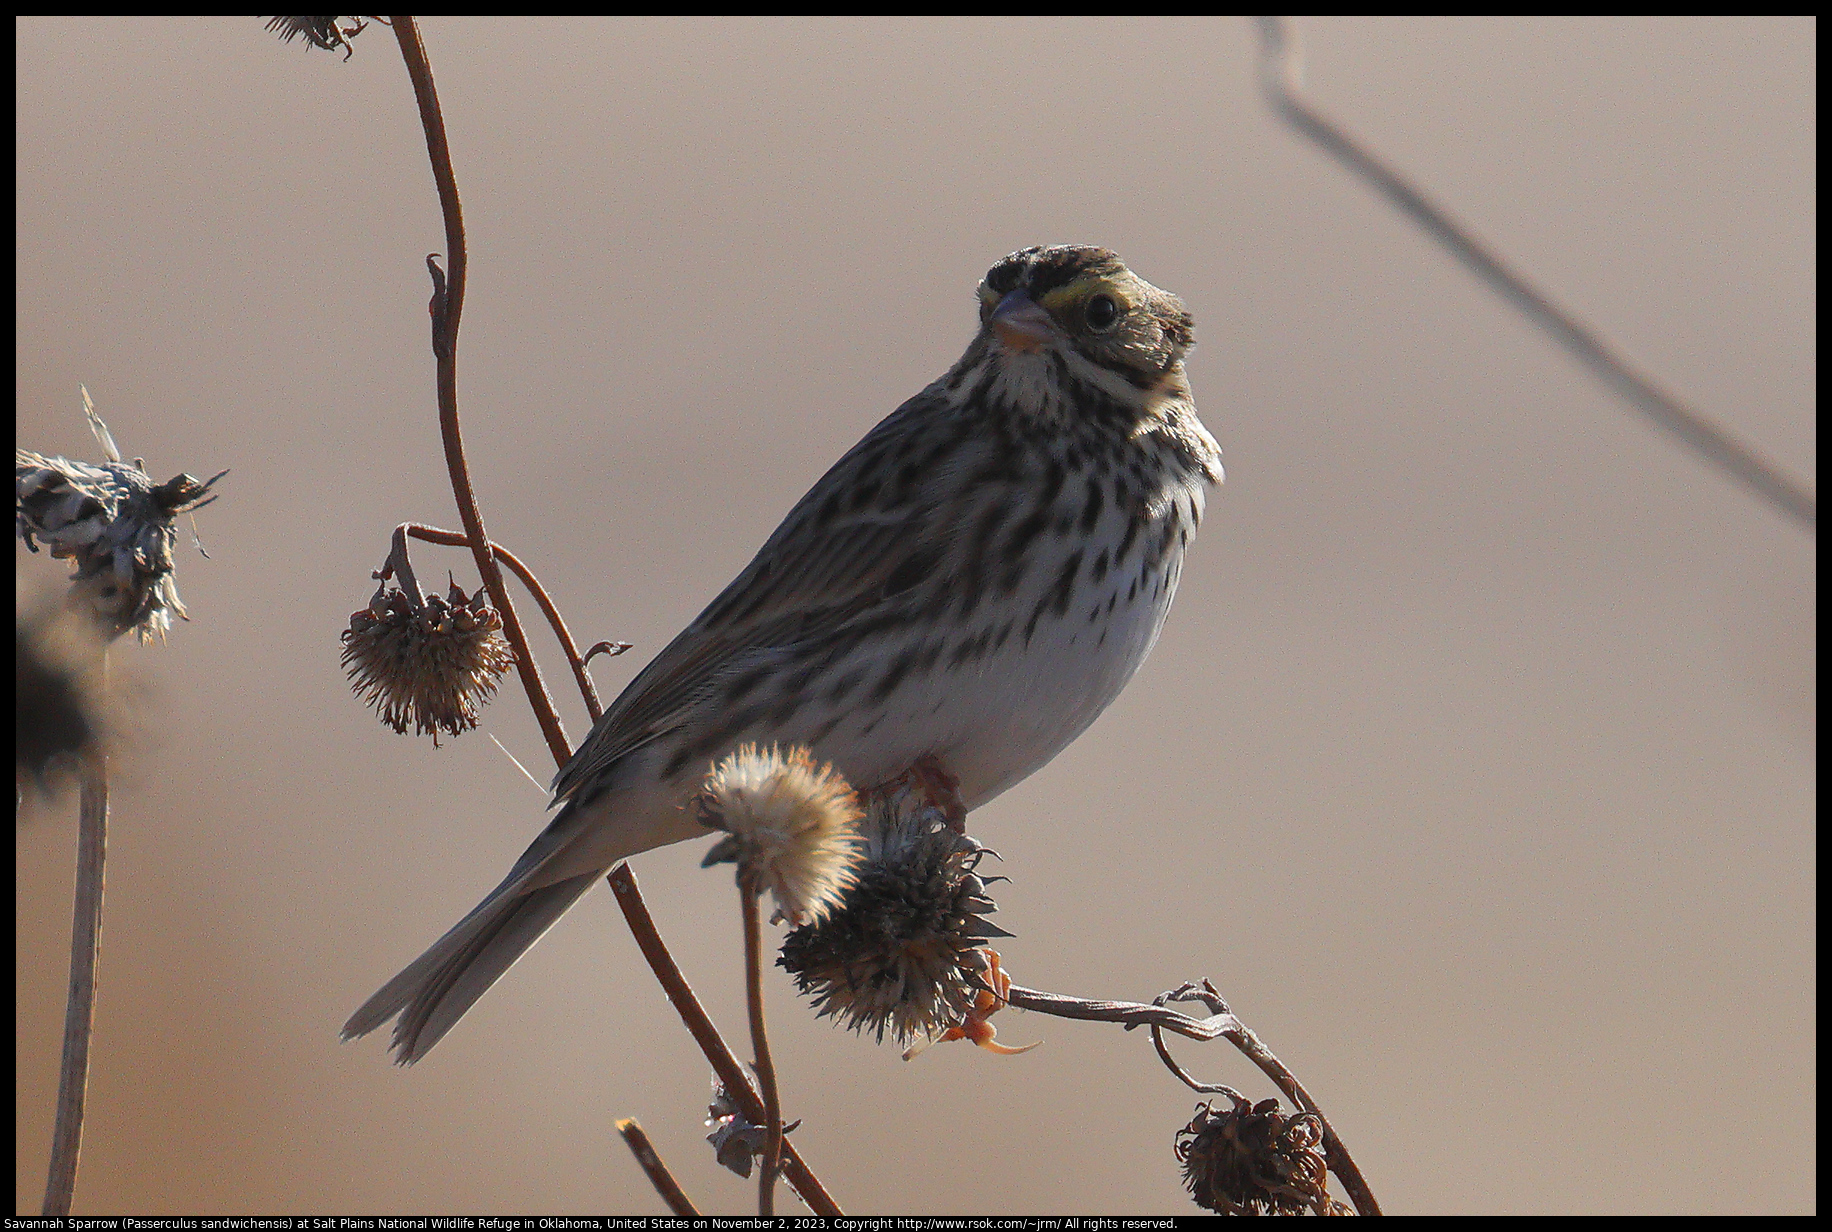 Savannah Sparrow (Passerculus sandwichensis) at Salt Plains National Wildlife Refuge in  Oklahoma, United States on November 2, 2023